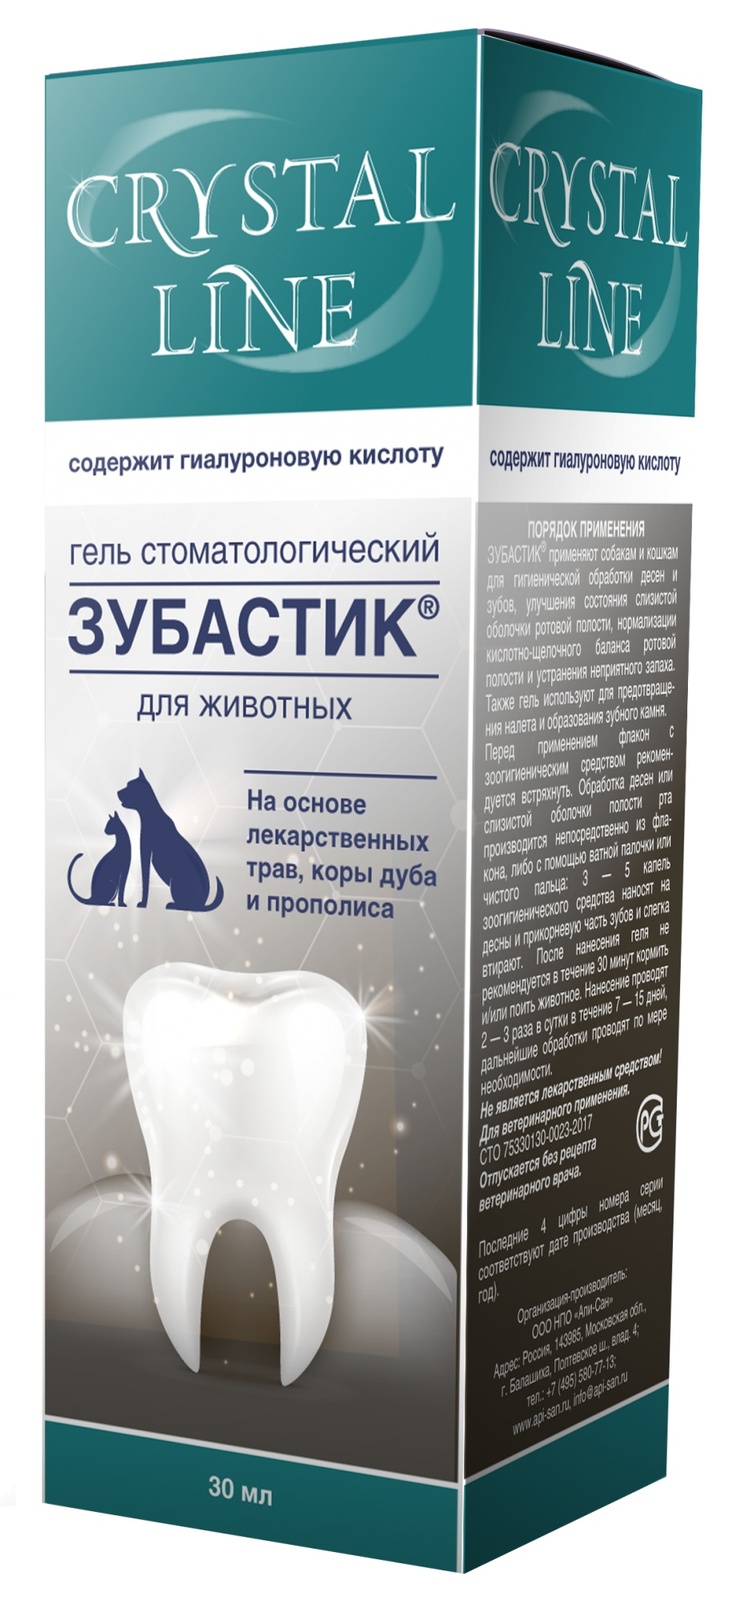 цена Apicenna Apicenna зубастик гель для чистки зубов Crystal line (30 г)